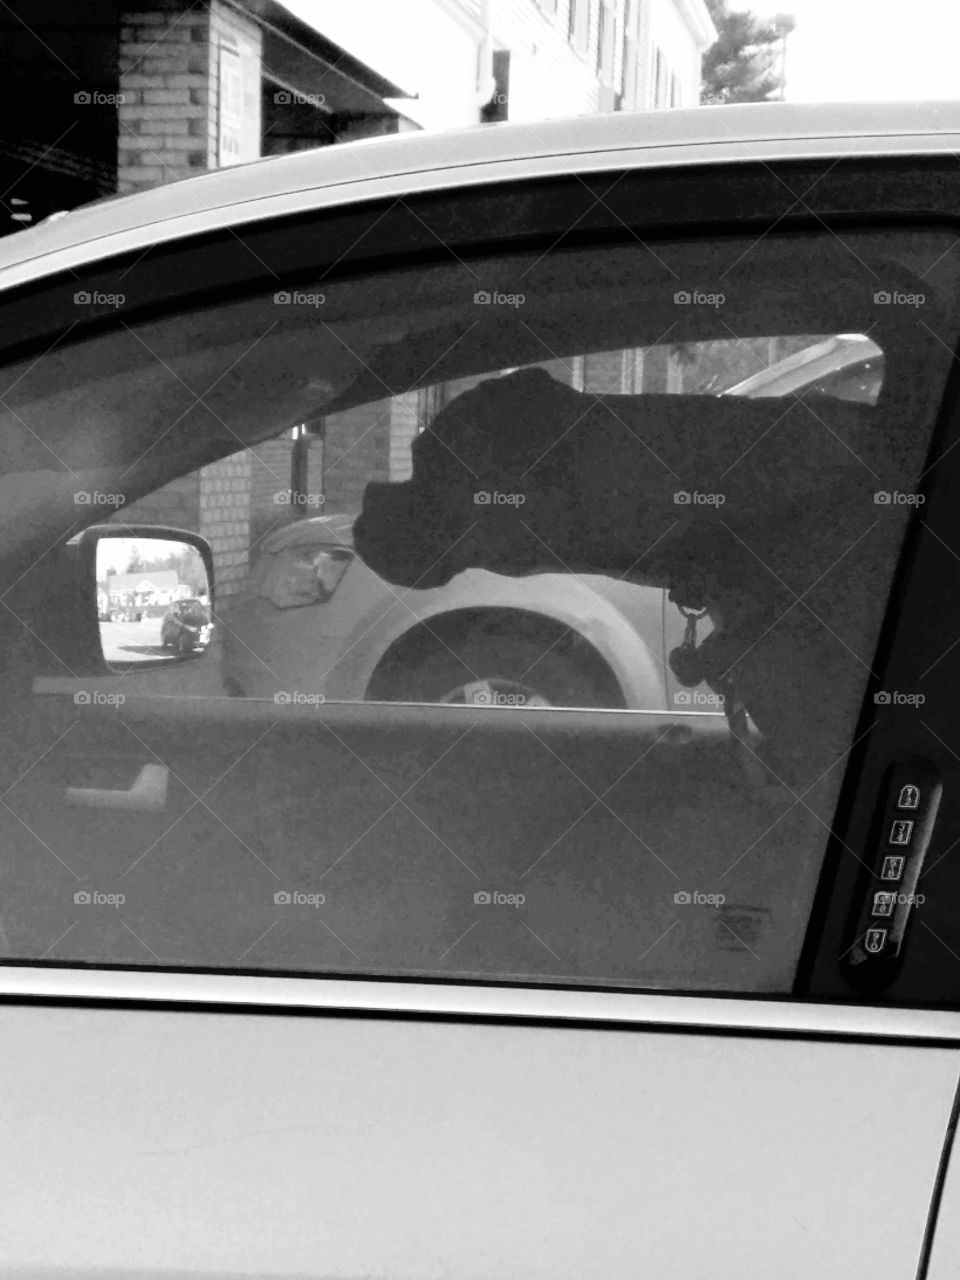 Dog silhouette in car, B&W photo.